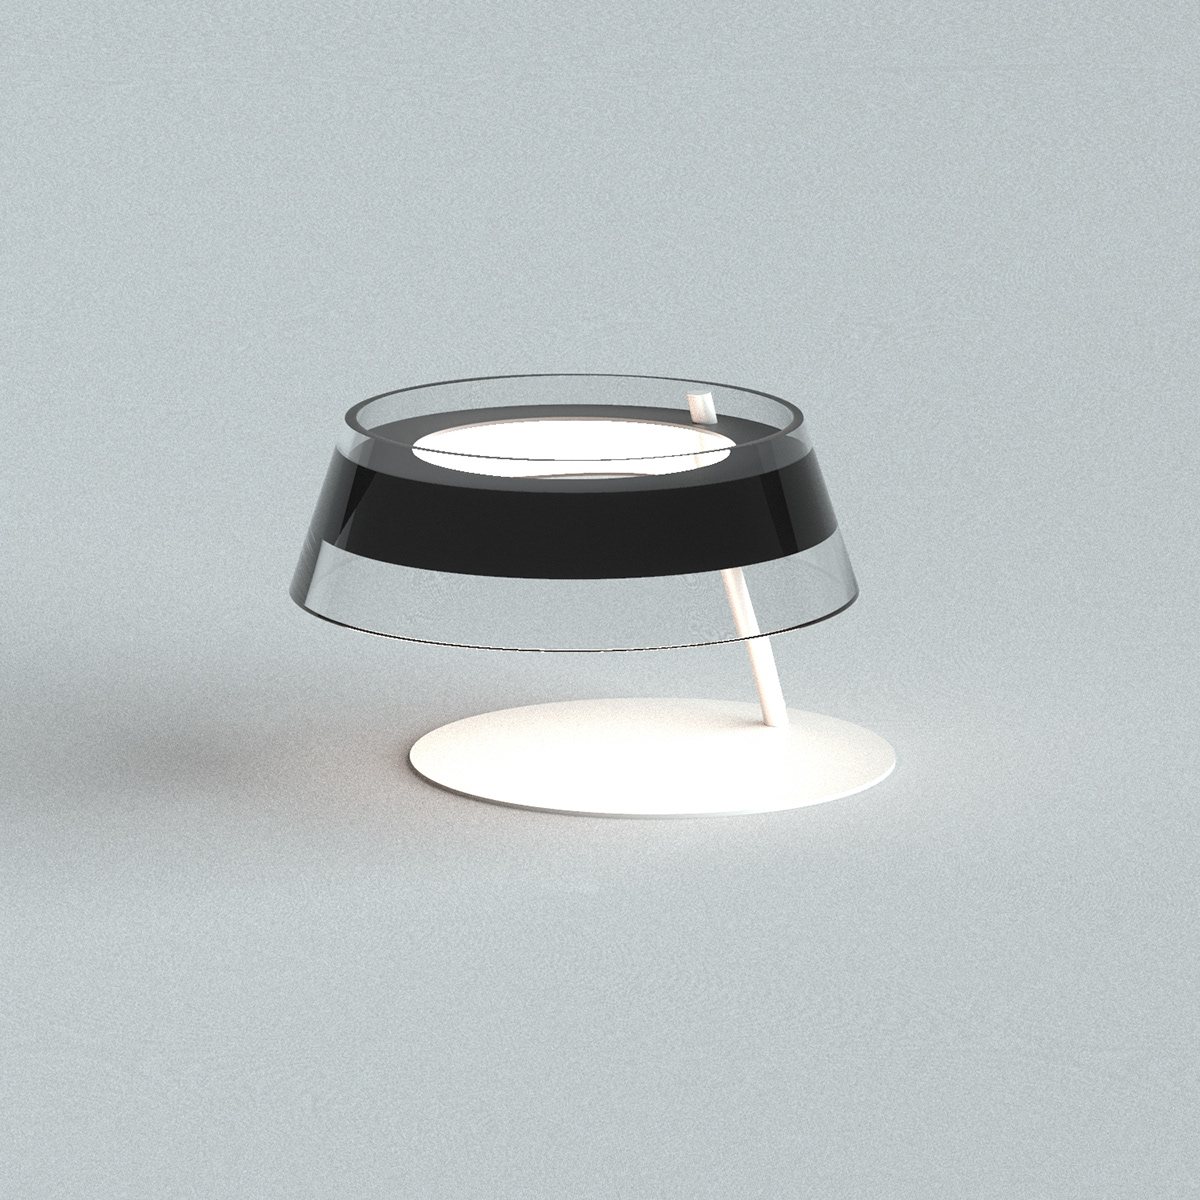 design desklamp desklight diseño Lamp light lighting Shades